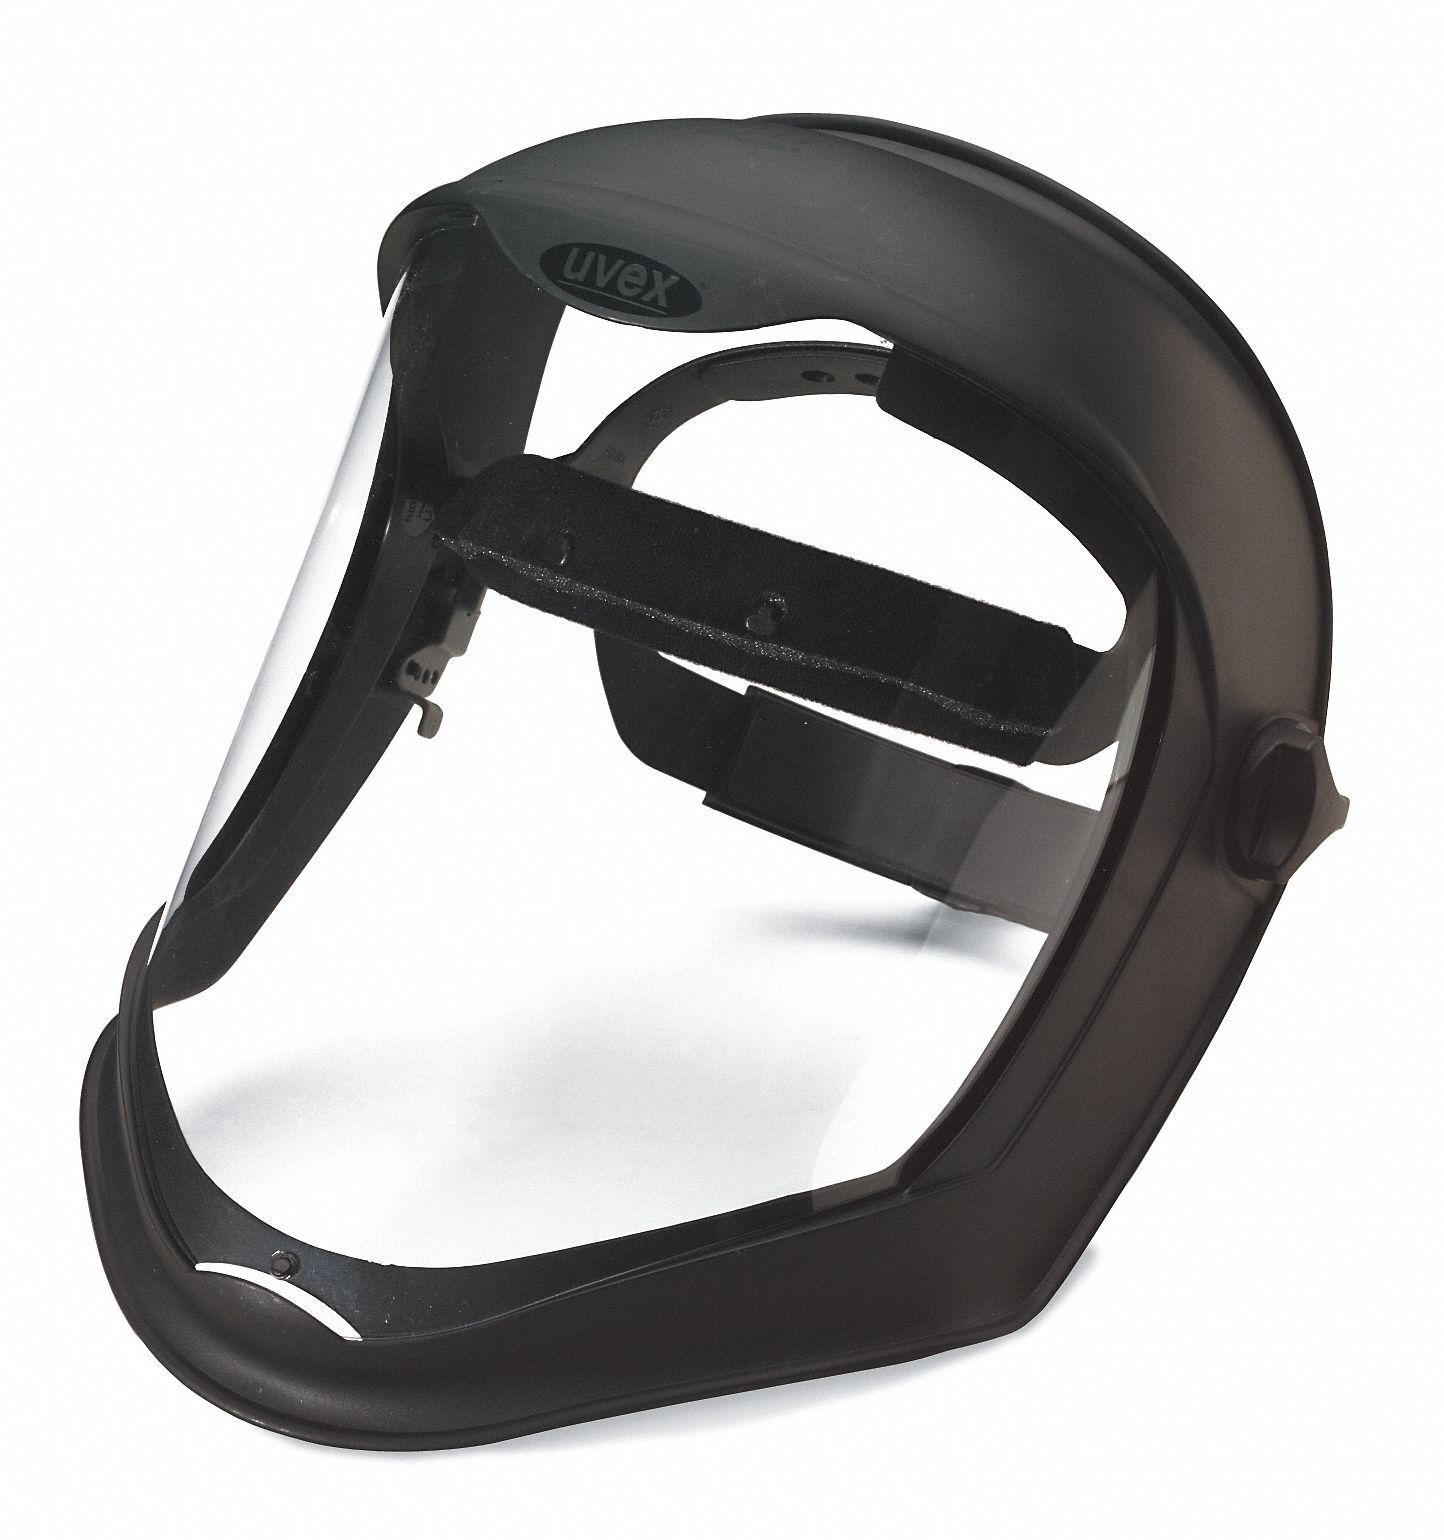 Clear Uvex by Honeywell Bionic Faceshield Visor Anti-Fog/Hardcoat #S8555 